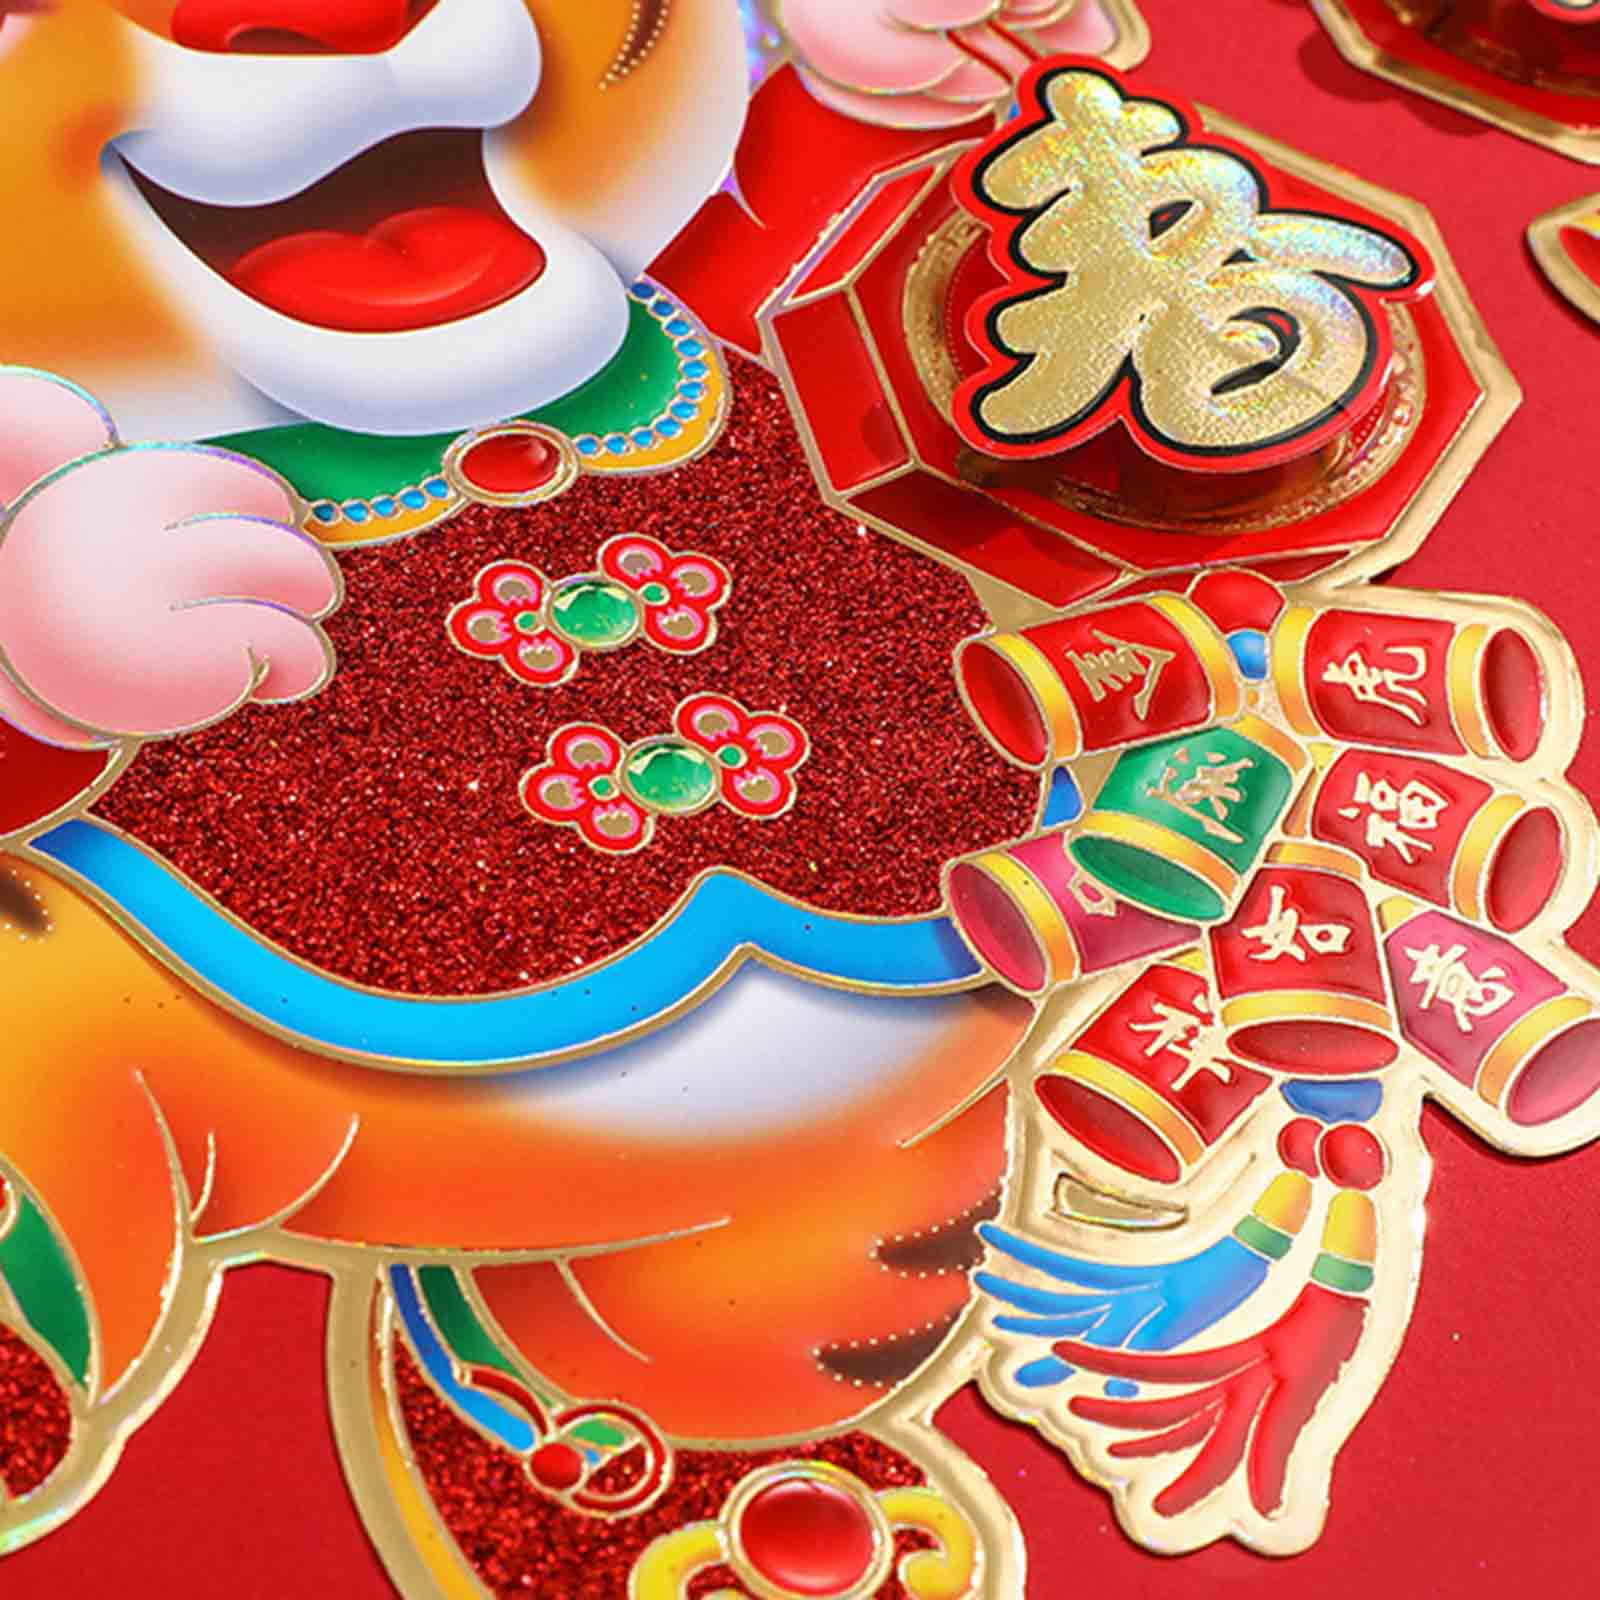 GENEMA 2022 New Year Chinese 3D Flocking Paper Sticker Tiger Decal